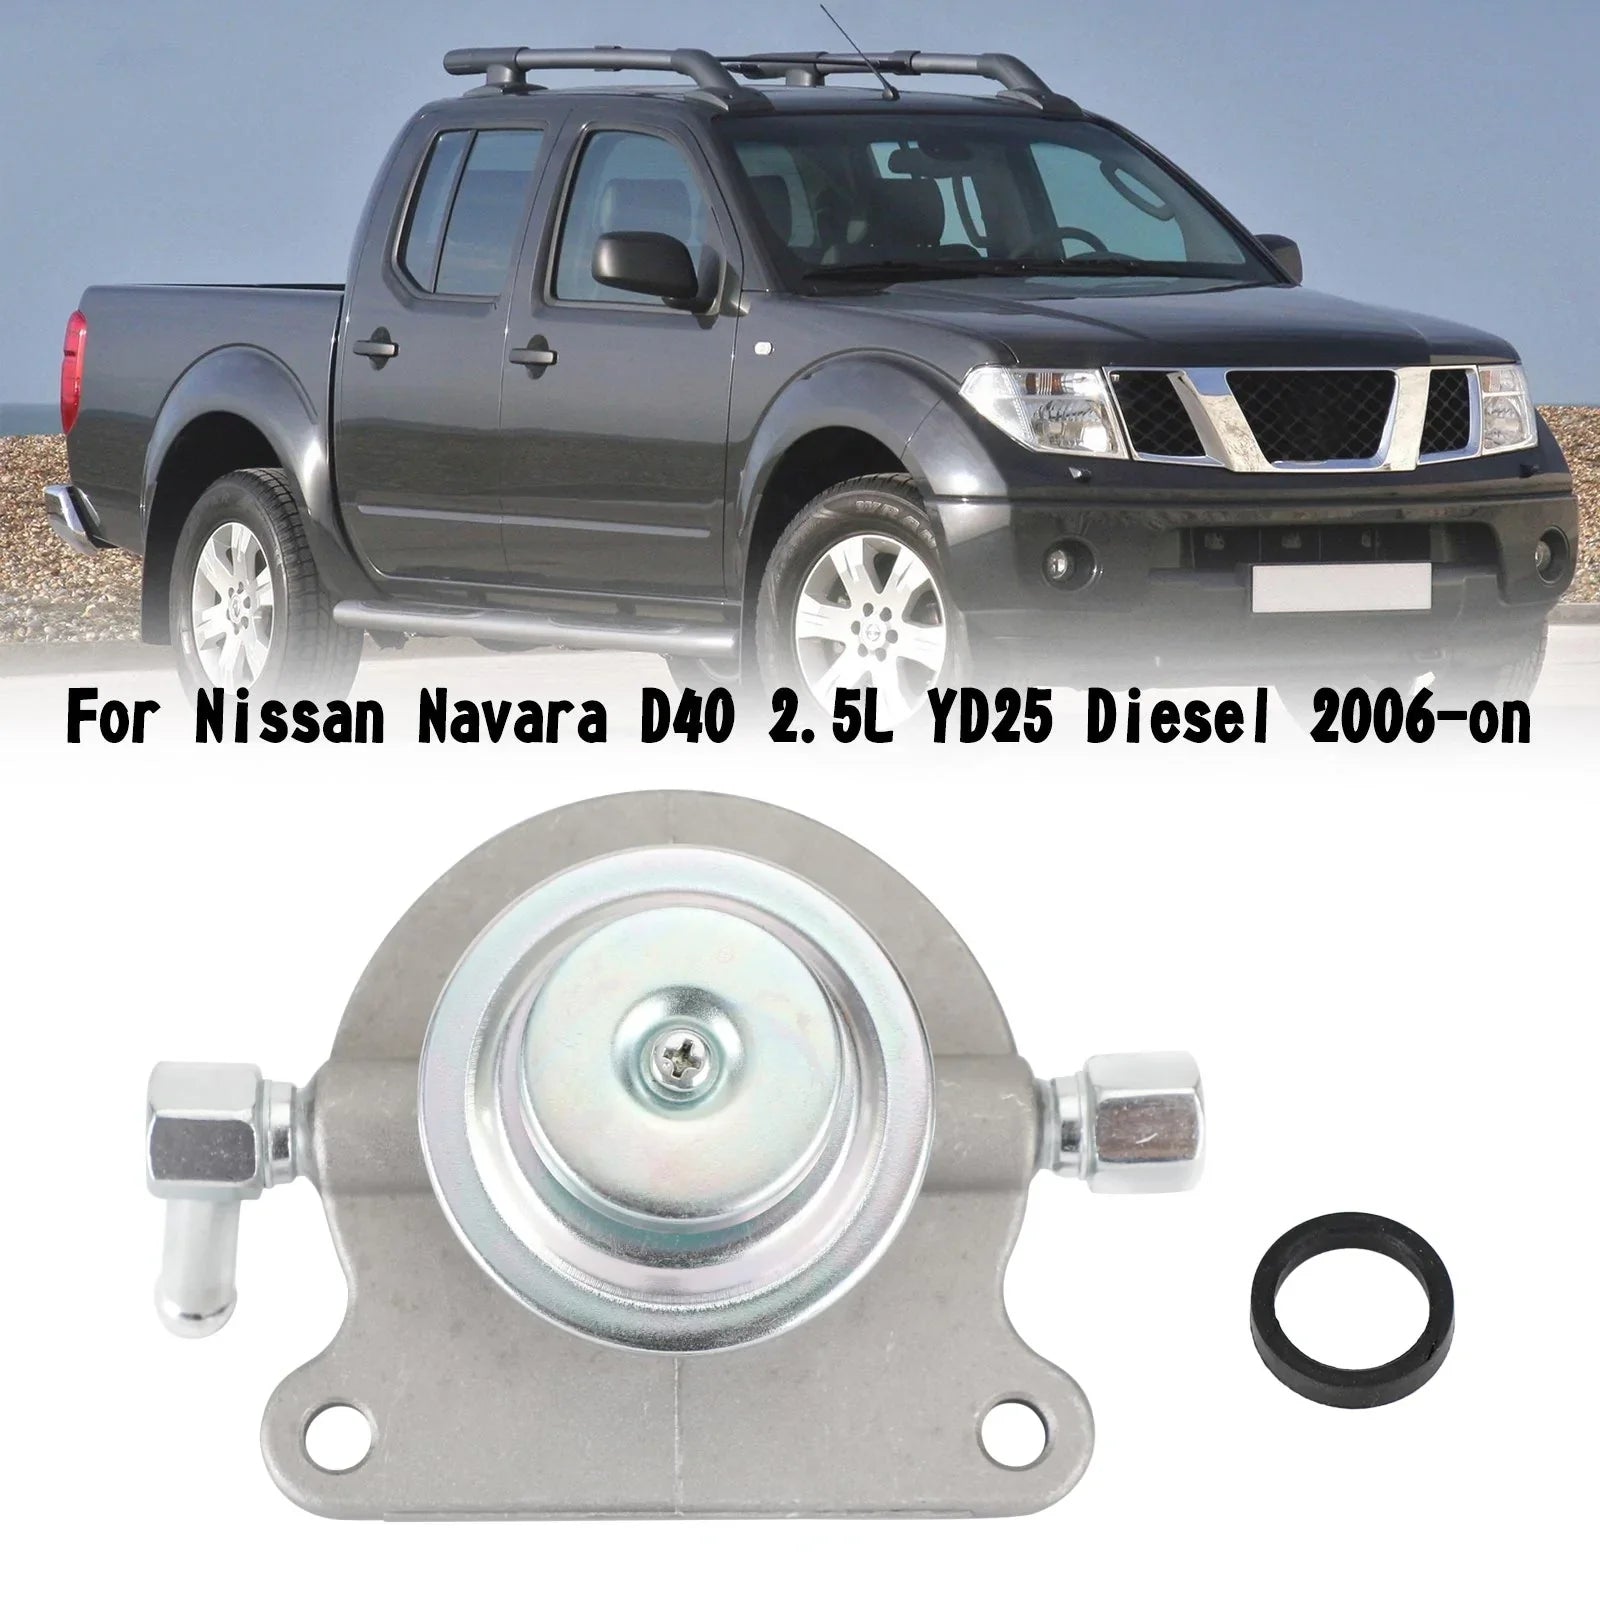 Pompa primer filtro carburante 10mm per Nissan Navara D40 2.5L YD25 Diesel 2006-on